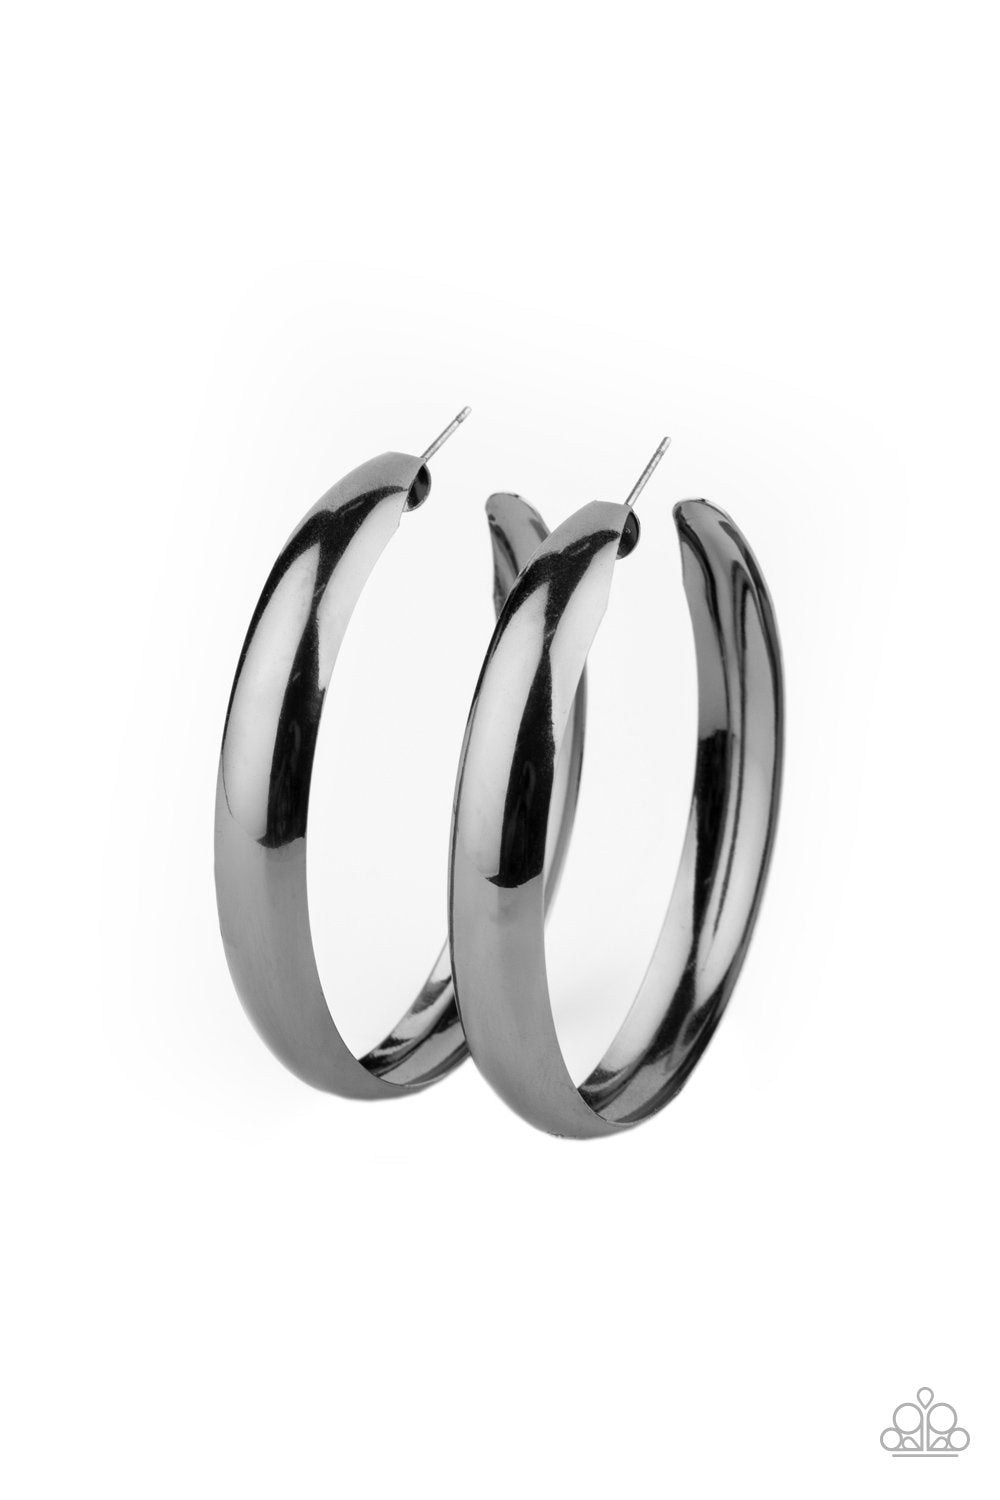 BEVEL In It Gunmetal Black Hoop Earrings - Paparazzi Accessories - lightbox -CarasShop.com - $5 Jewelry by Cara Jewels